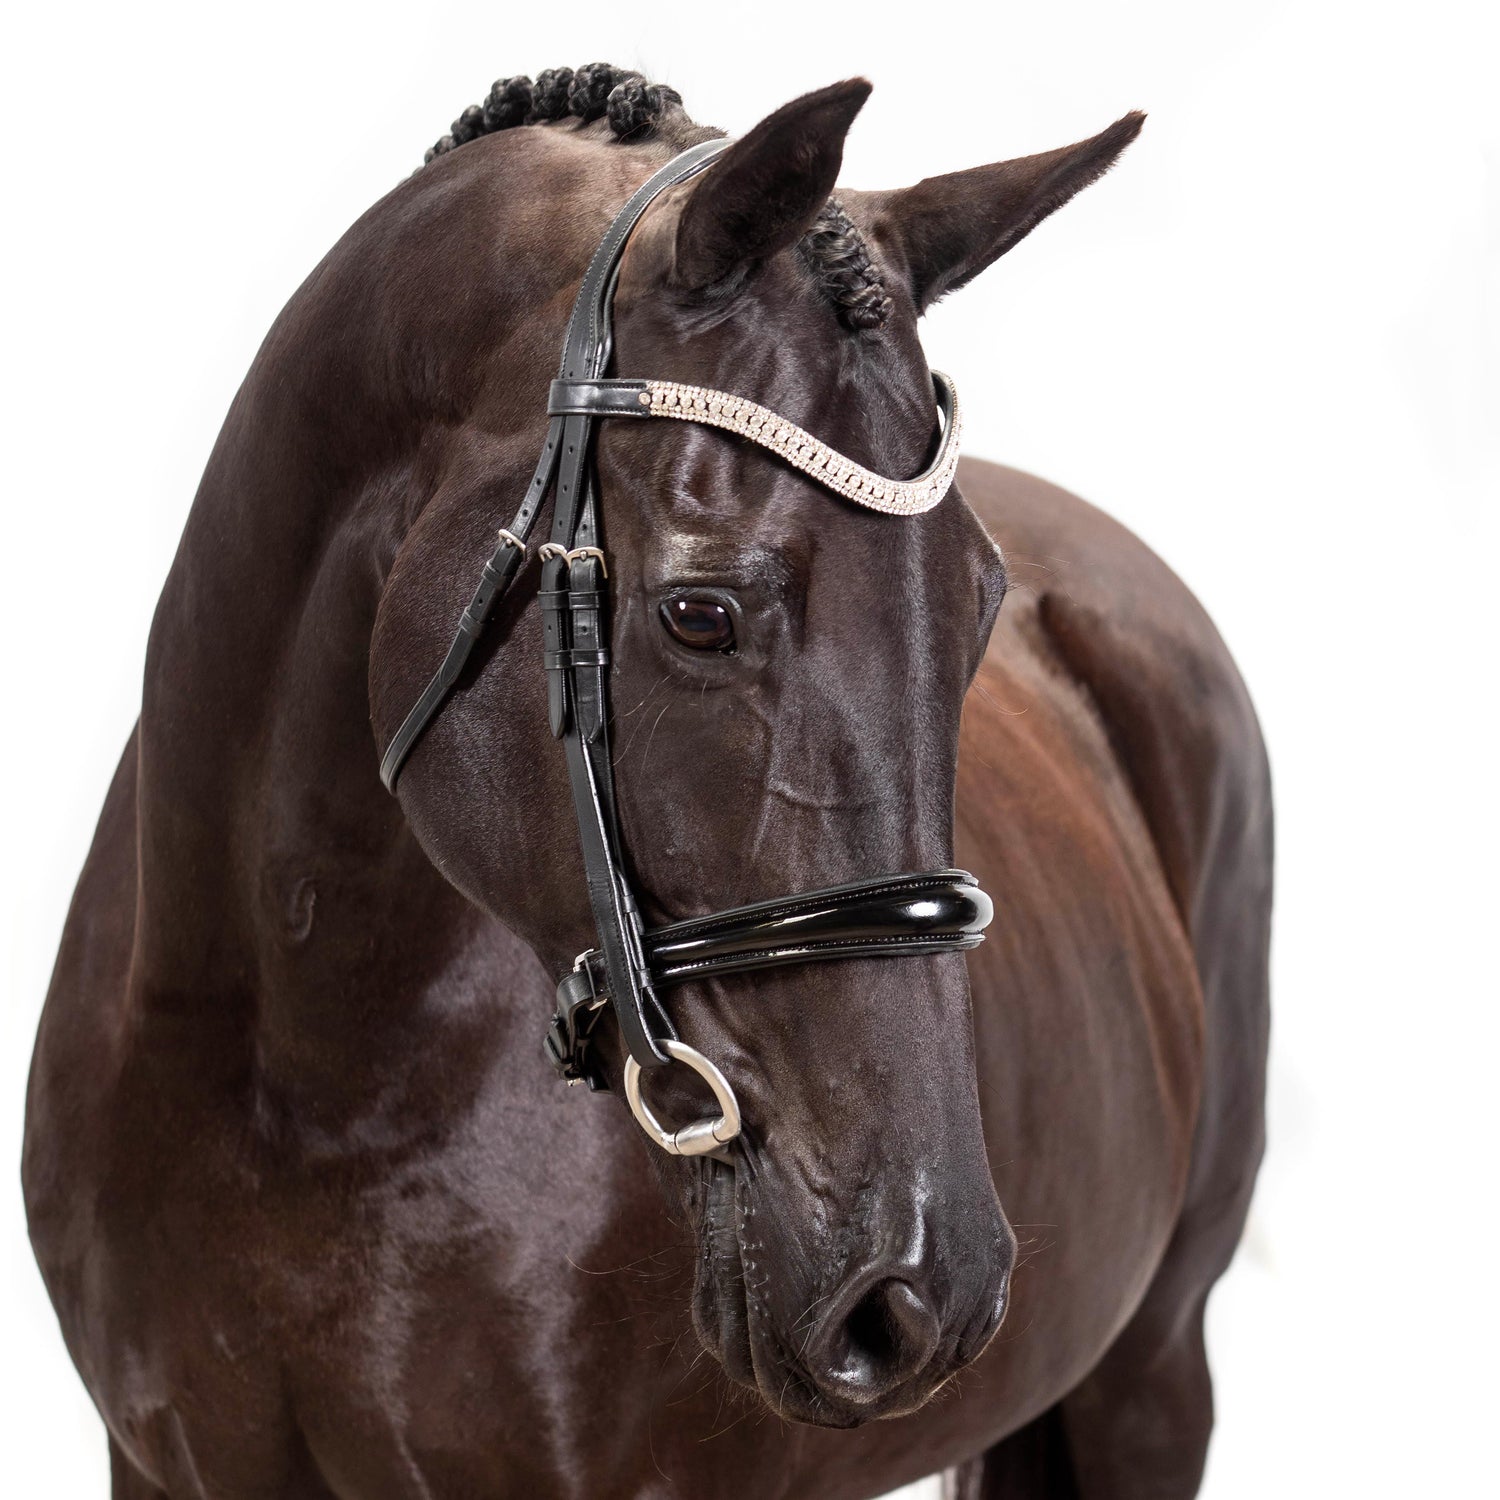 Flexible Fit Equestrian Australia Products